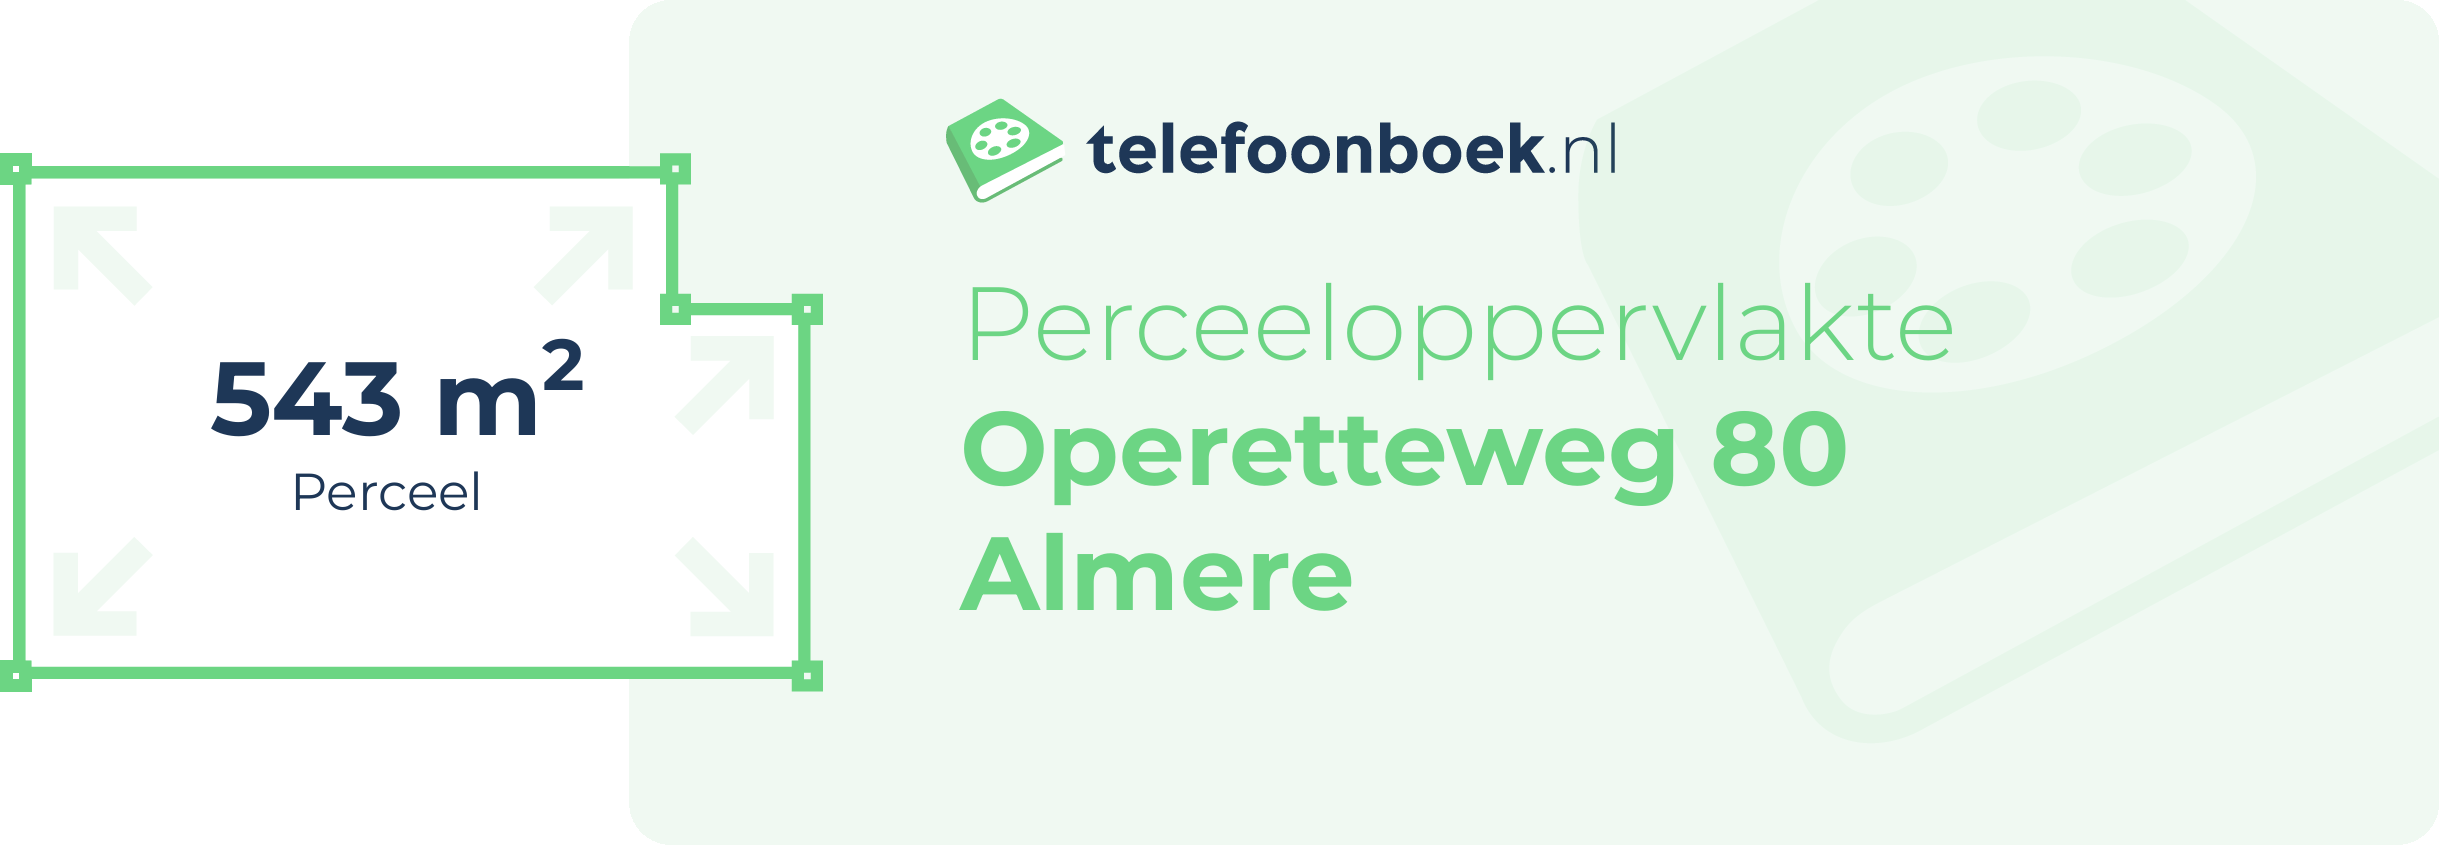 Perceeloppervlakte Operetteweg 80 Almere